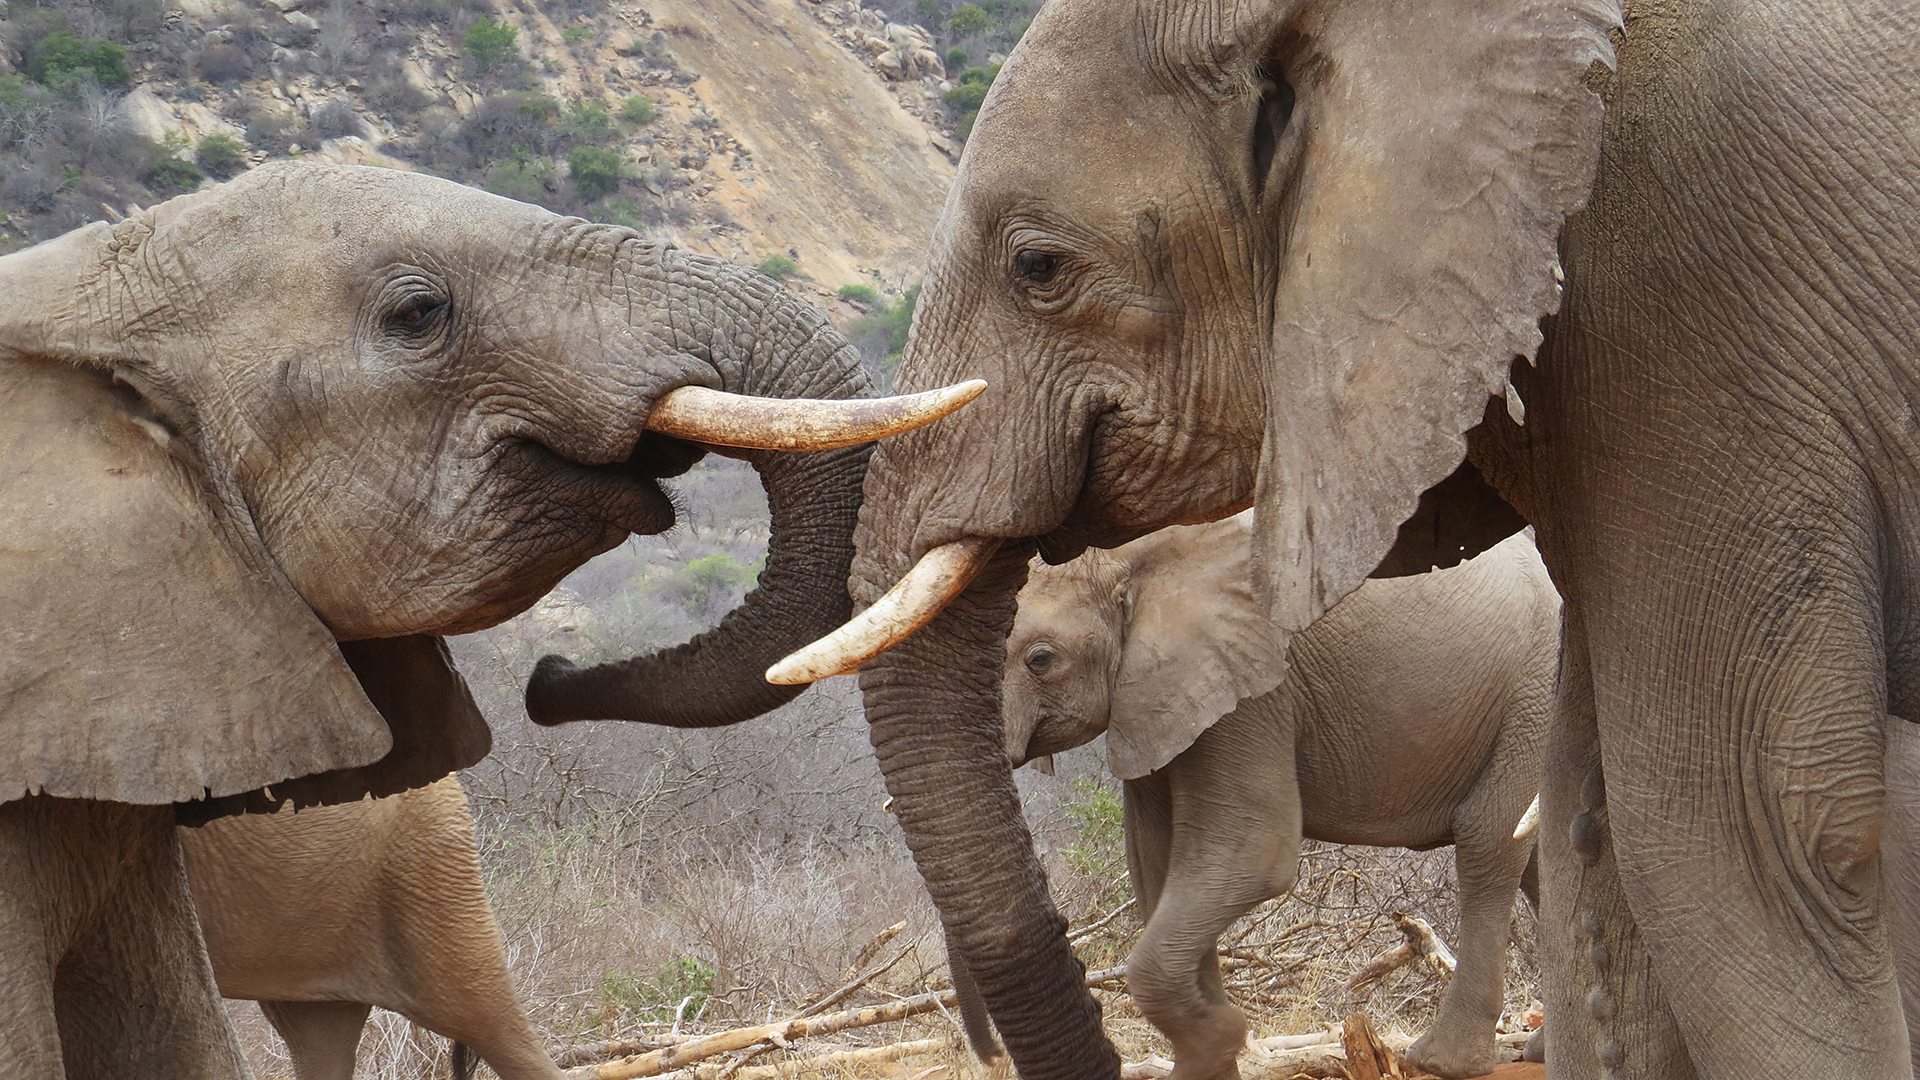 Yes, Baby Elephants Do Suck Their Trunks